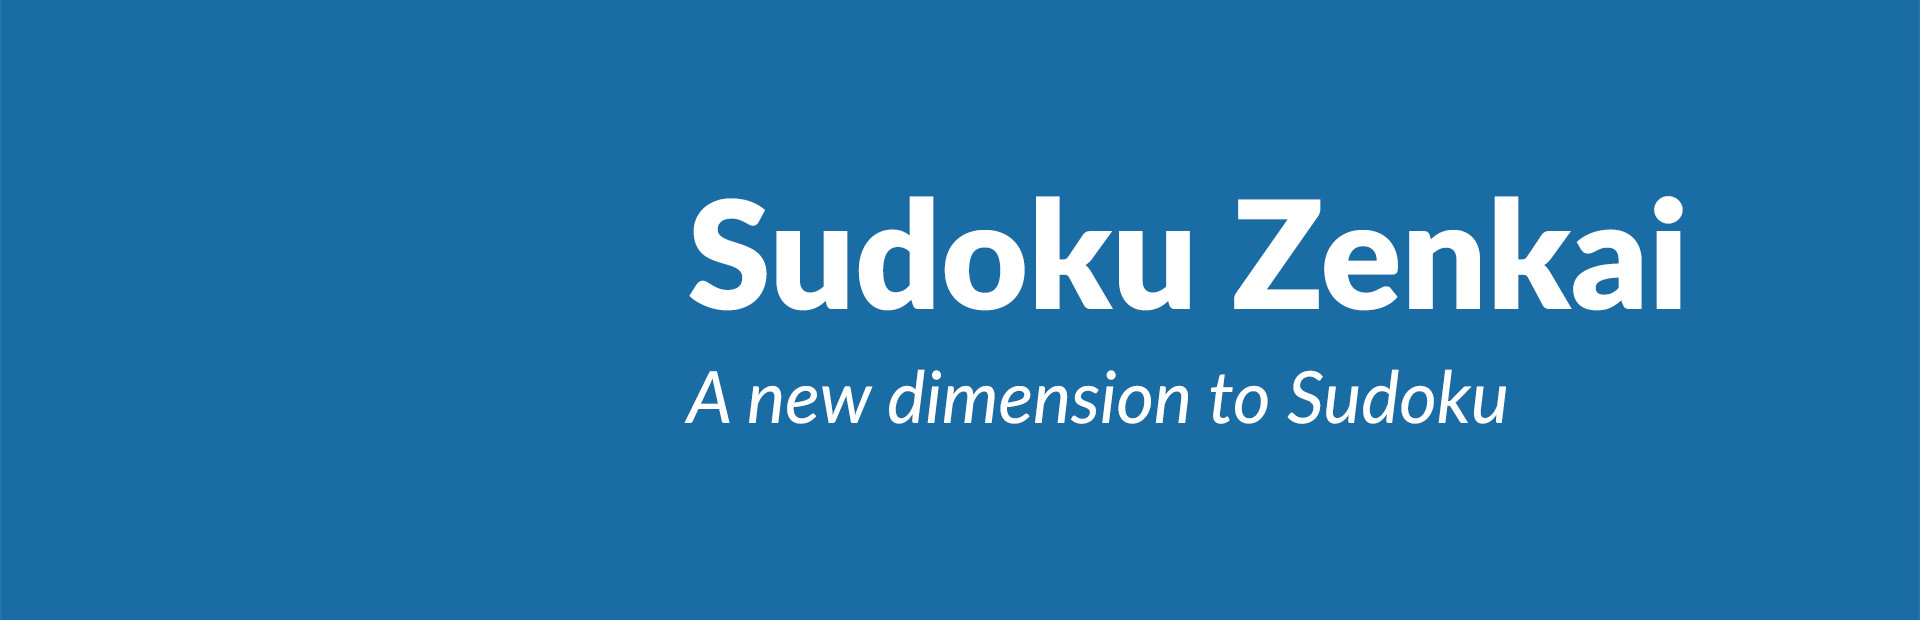 Sudoku Zenkai / 数独全卡 cover image